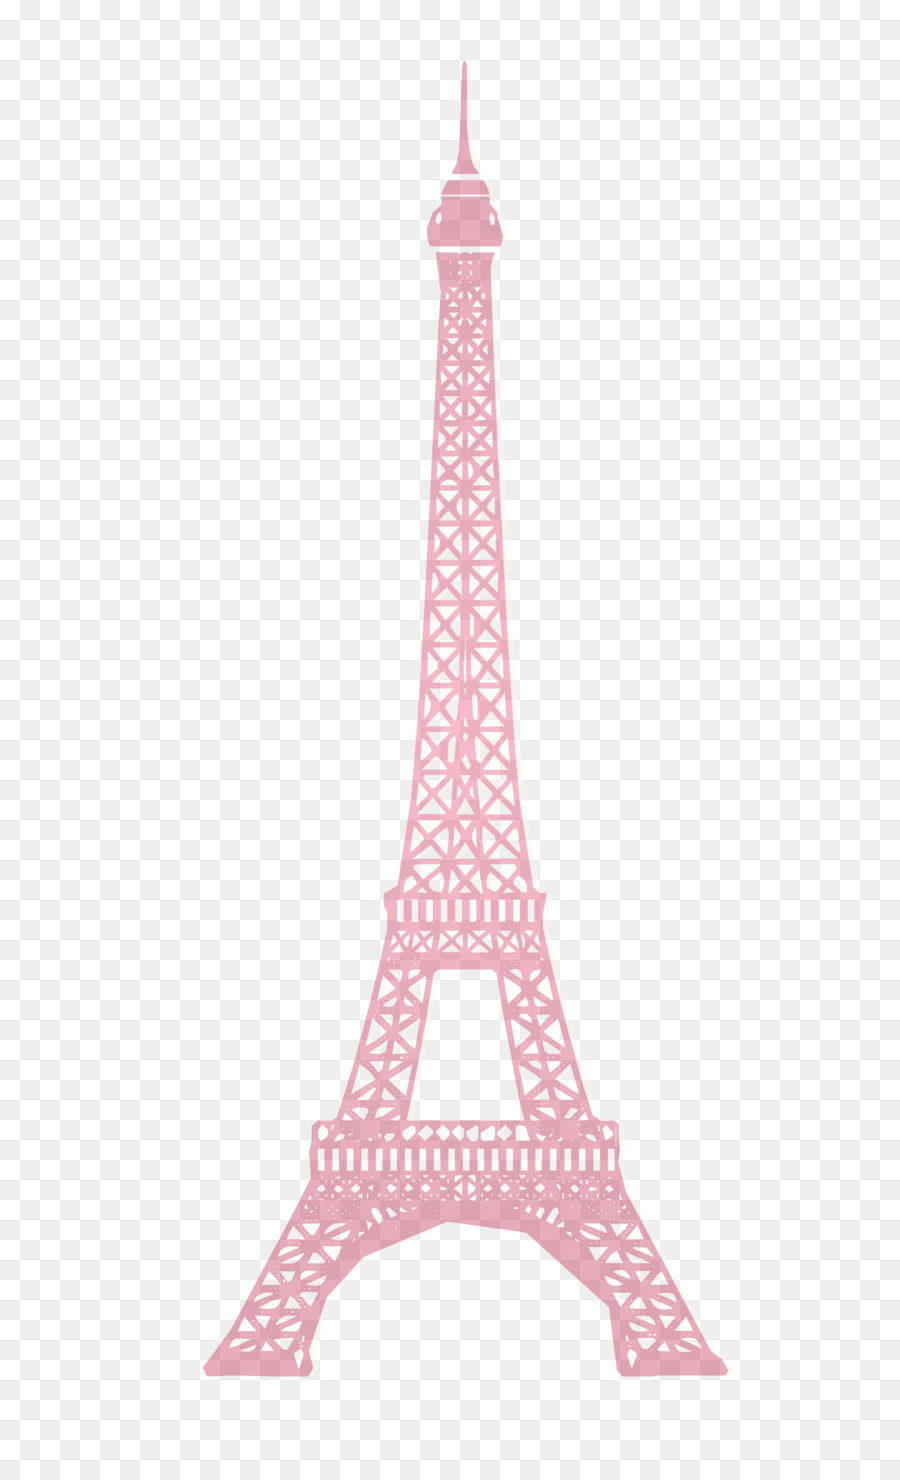 Eiffel Tower Silhouette - Eiffel Tower png download - 1117*2509 - Free Transparent Eiffel Tower png Download.